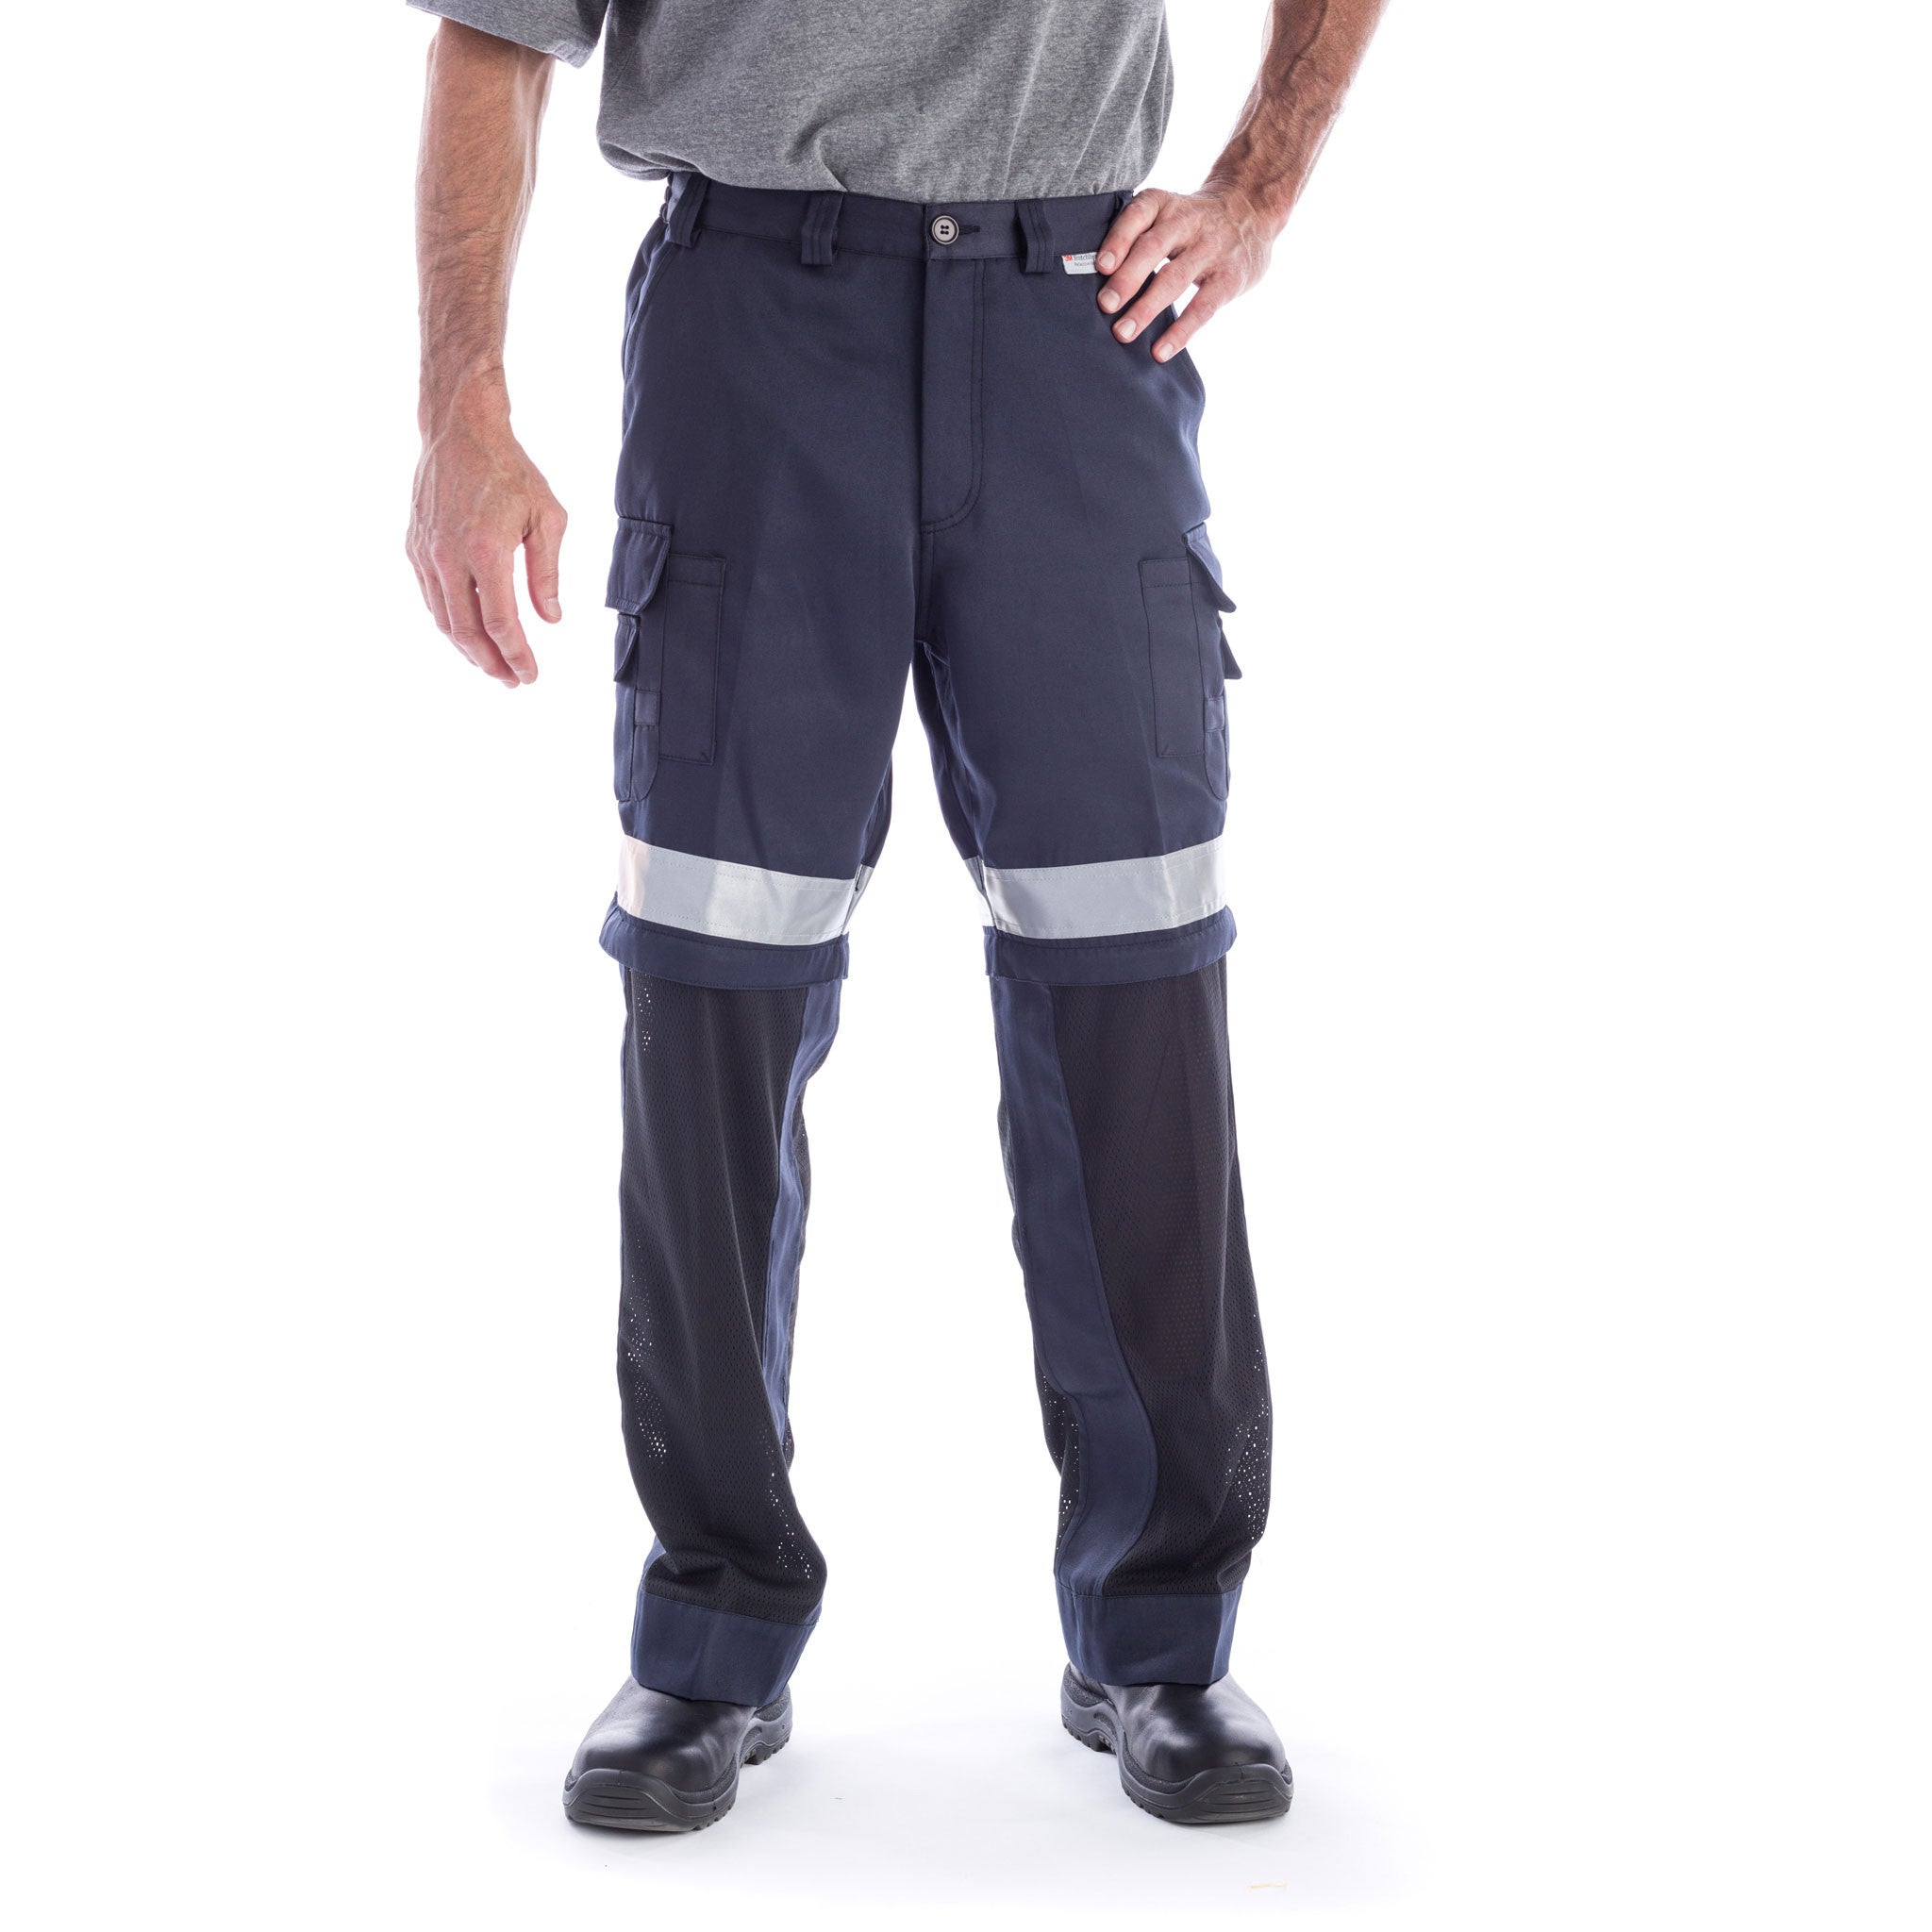 CoolWorks Hi-Vis Men's Ventilated Cargo Work Pants